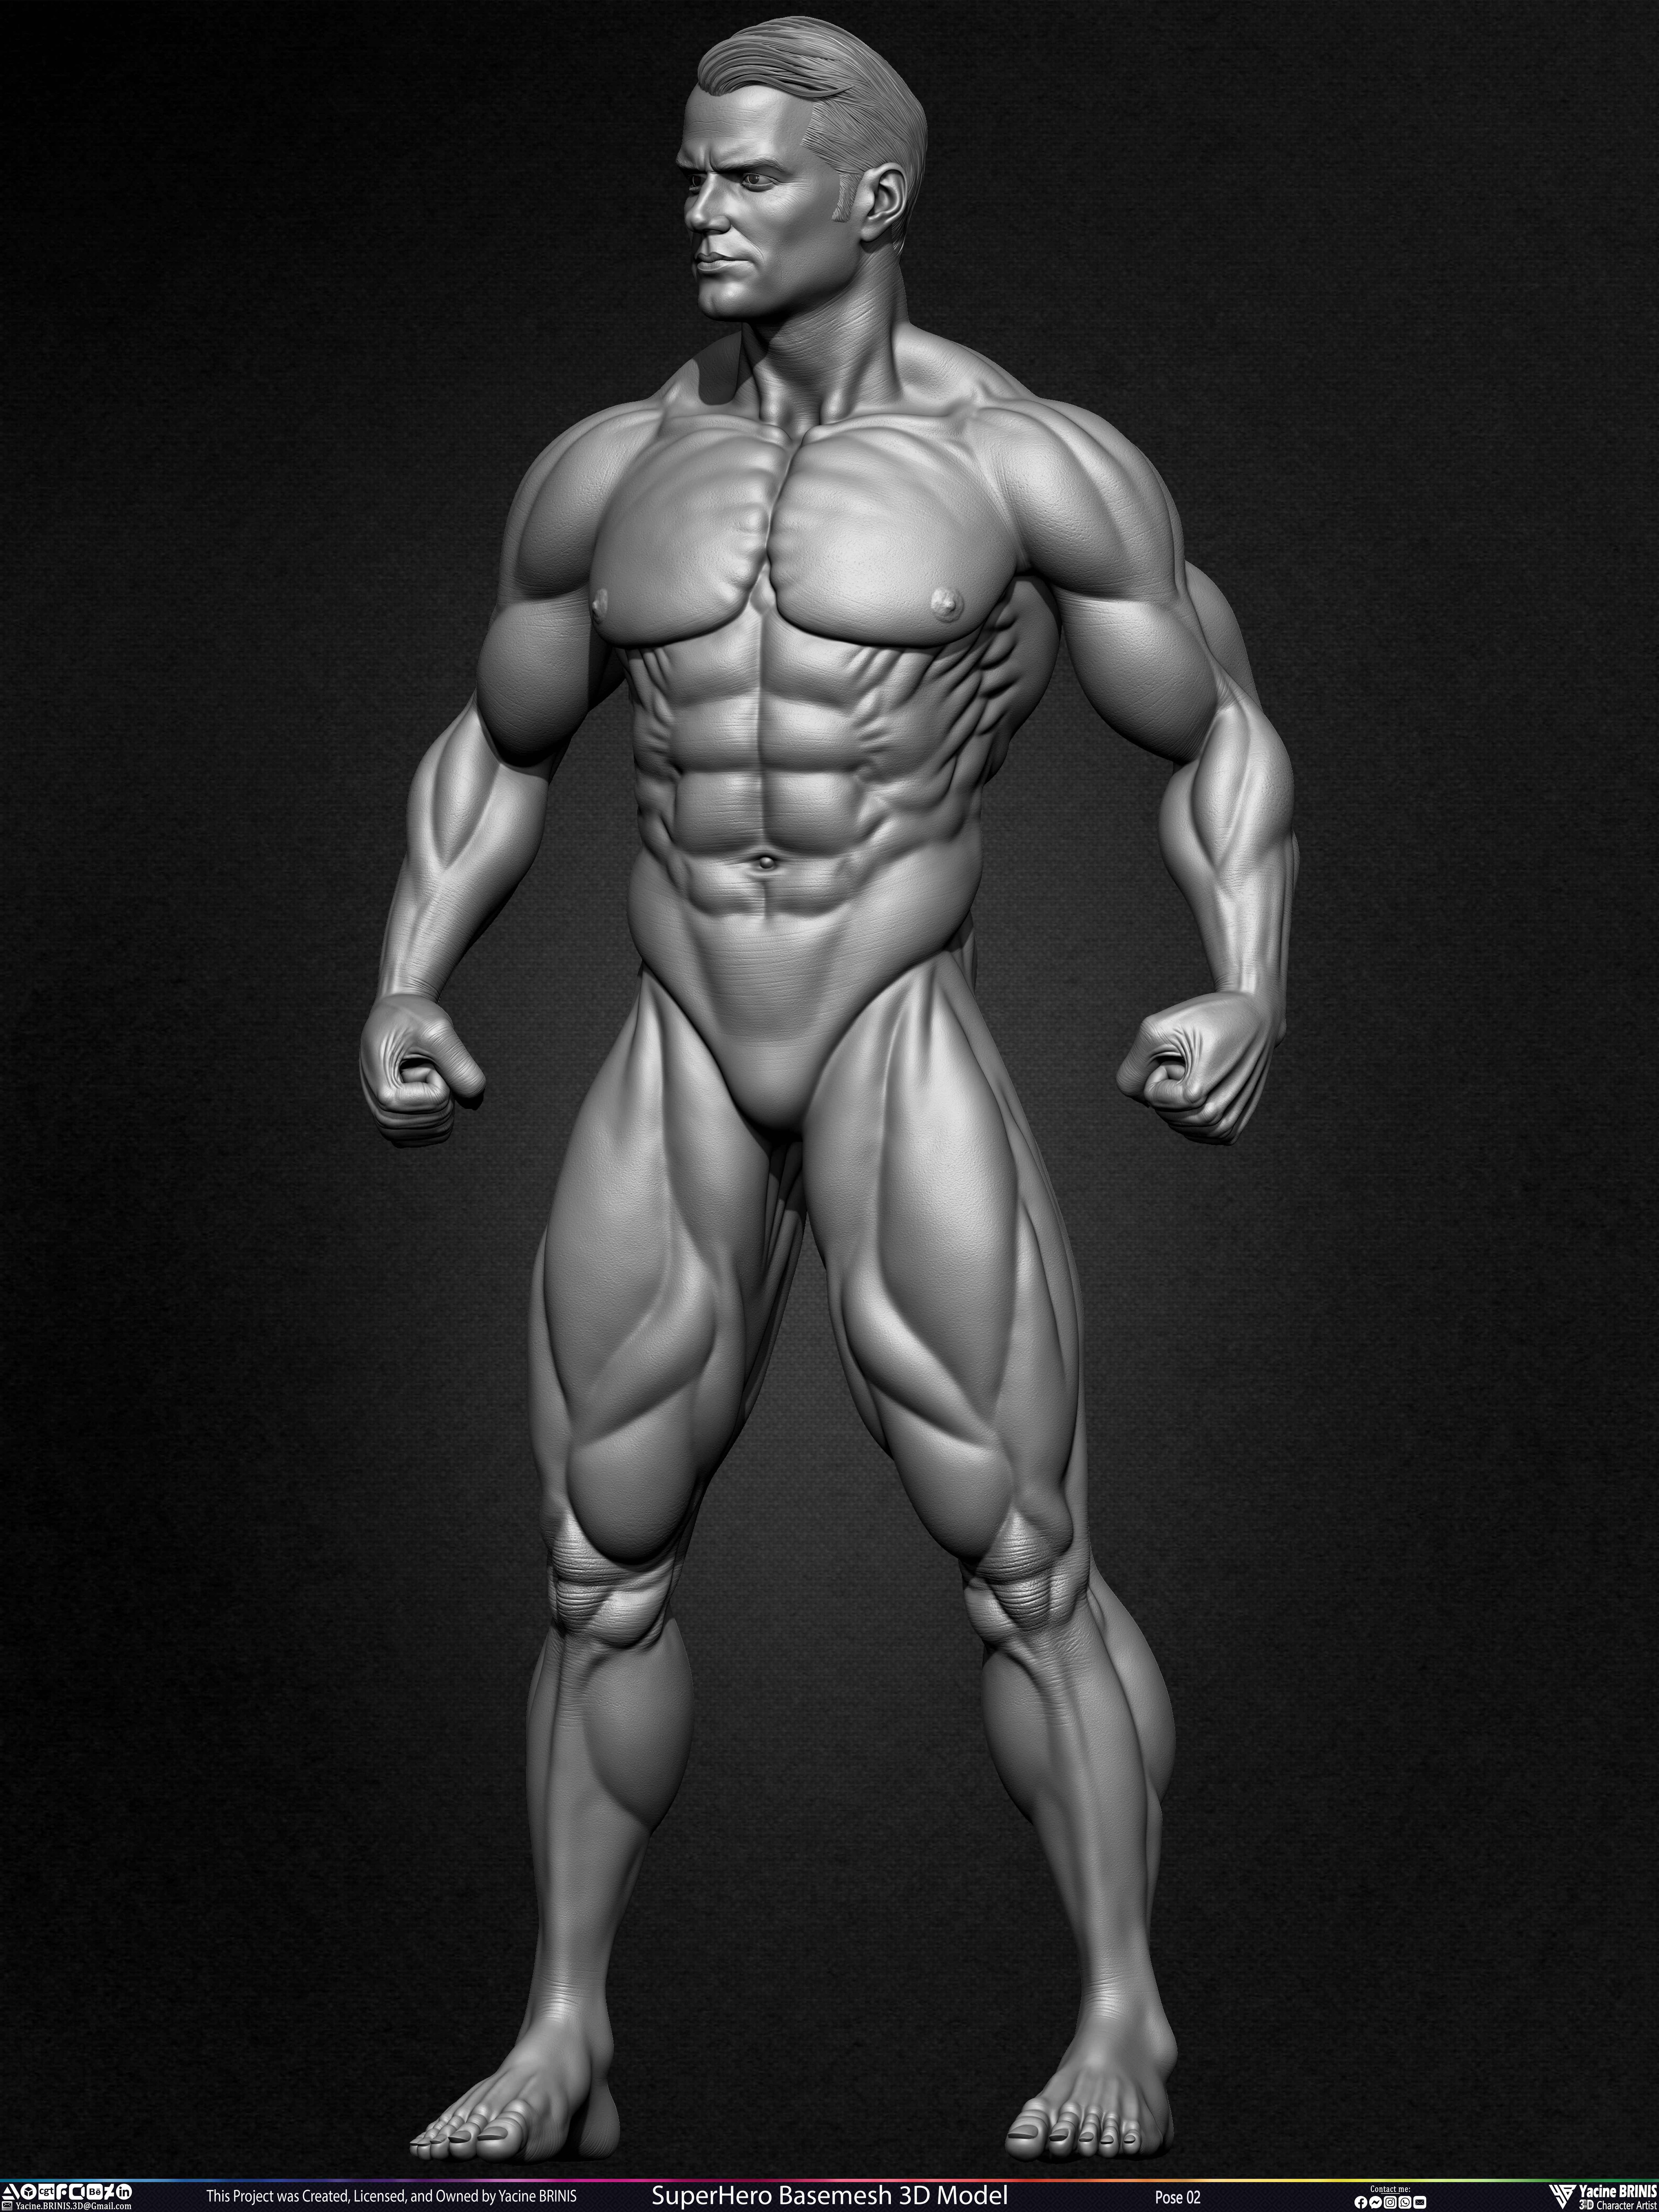 Super-Hero Basemesh 3D Model - Henry Cavill- Man of Steel - Superman - Pose 02 Sculpted by Yacine BRINIS Set 013